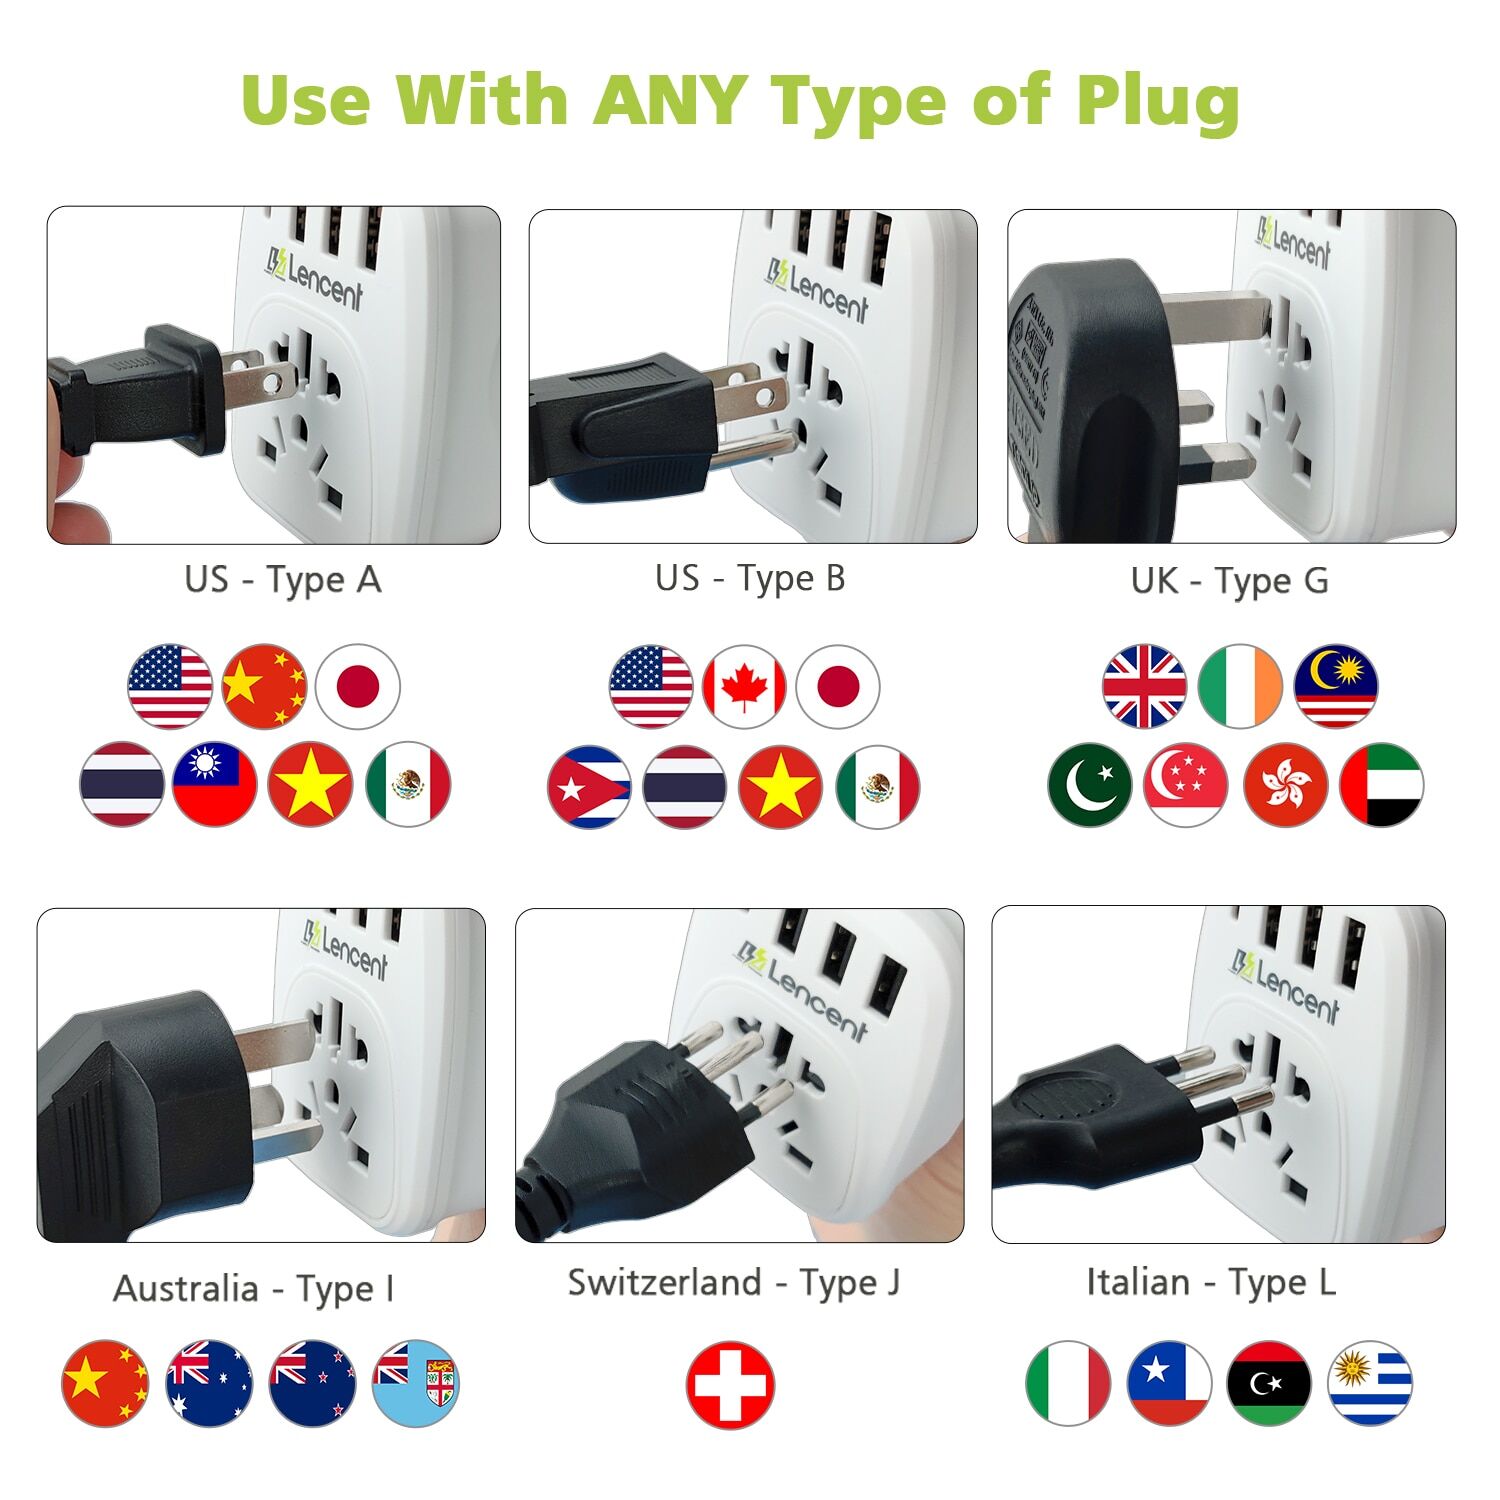 Plug USB travel adapter World to EU 110V-220V 4000W overload protection € 28,73